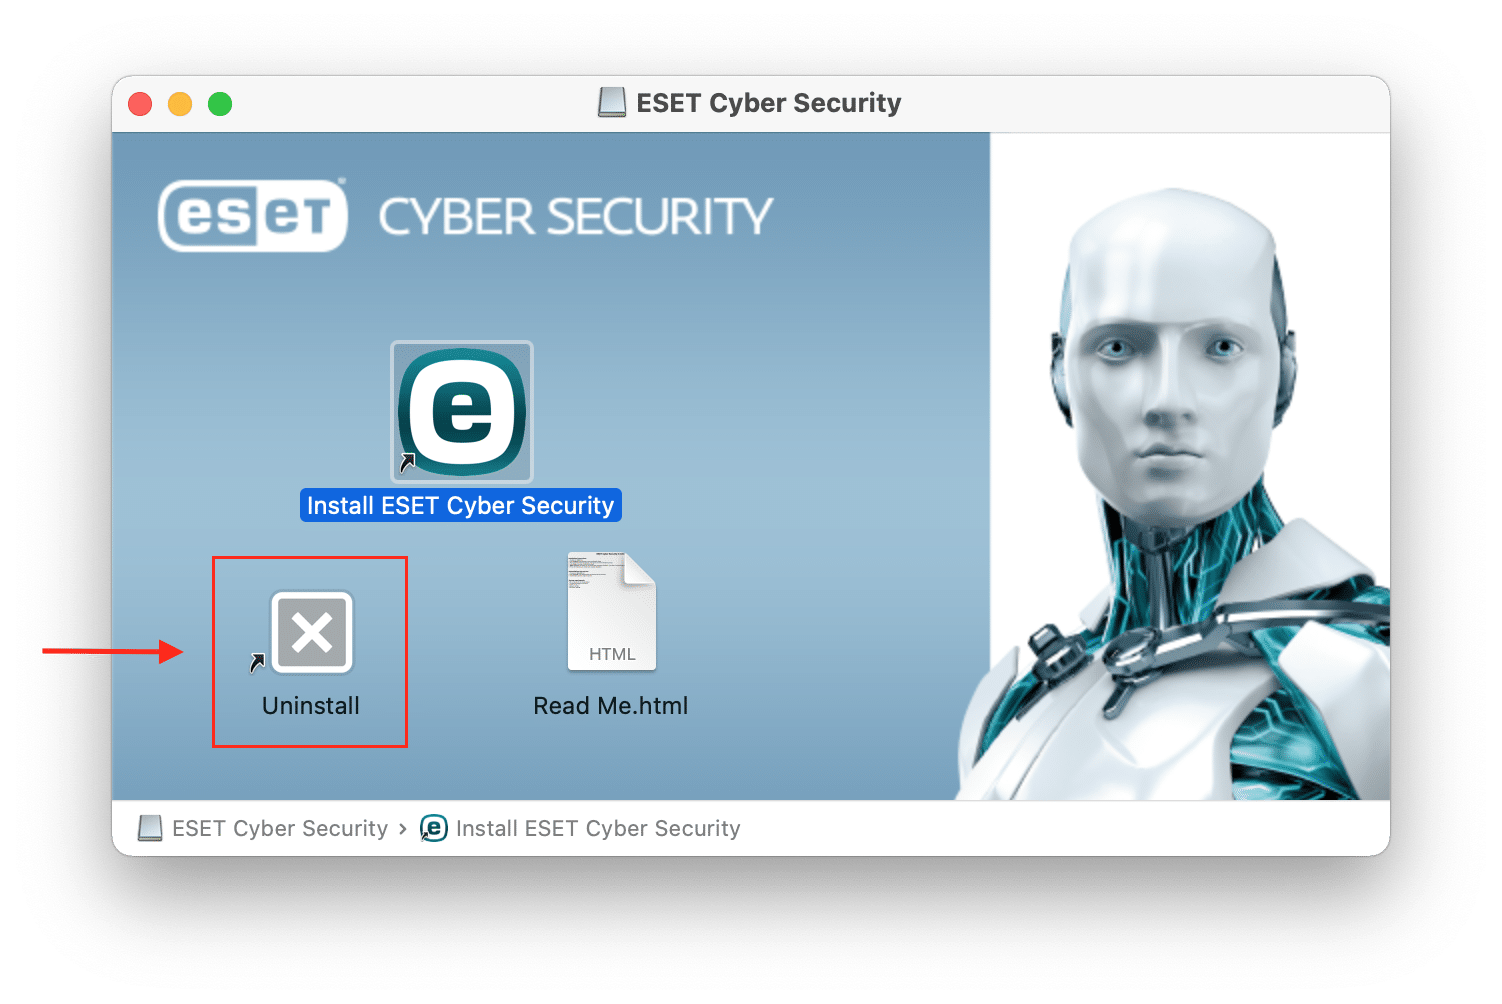 Eset Cyber Security installation window